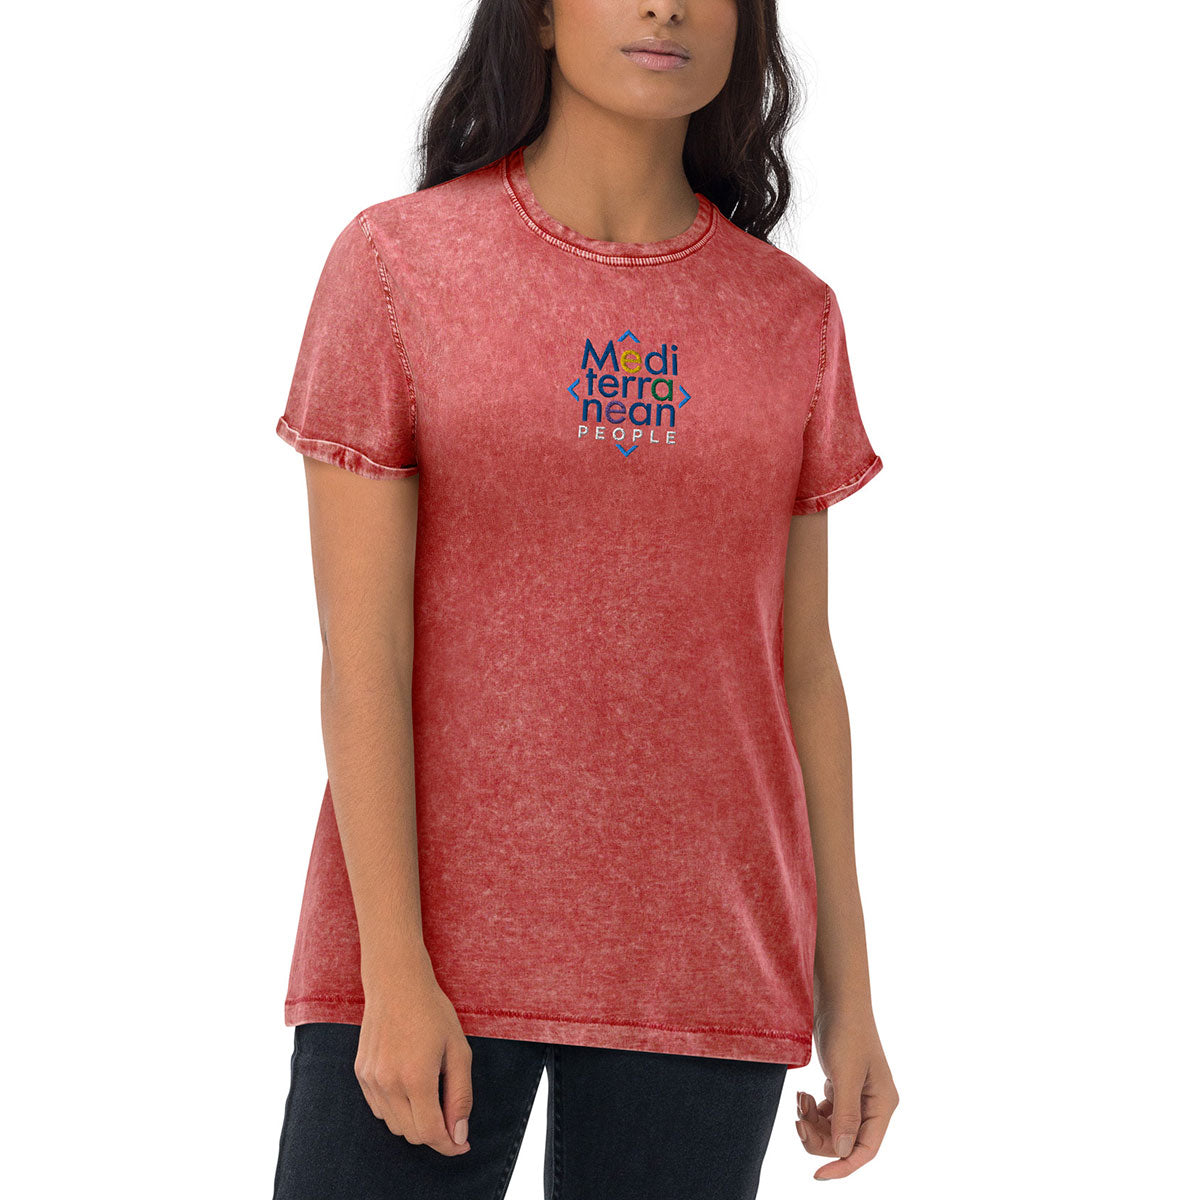 LIKELELE world · Camiseta m/corta·MEDITERRANEAN PEOPLE·Mujer/Unisex · Medium·Garnet Red-376b2f